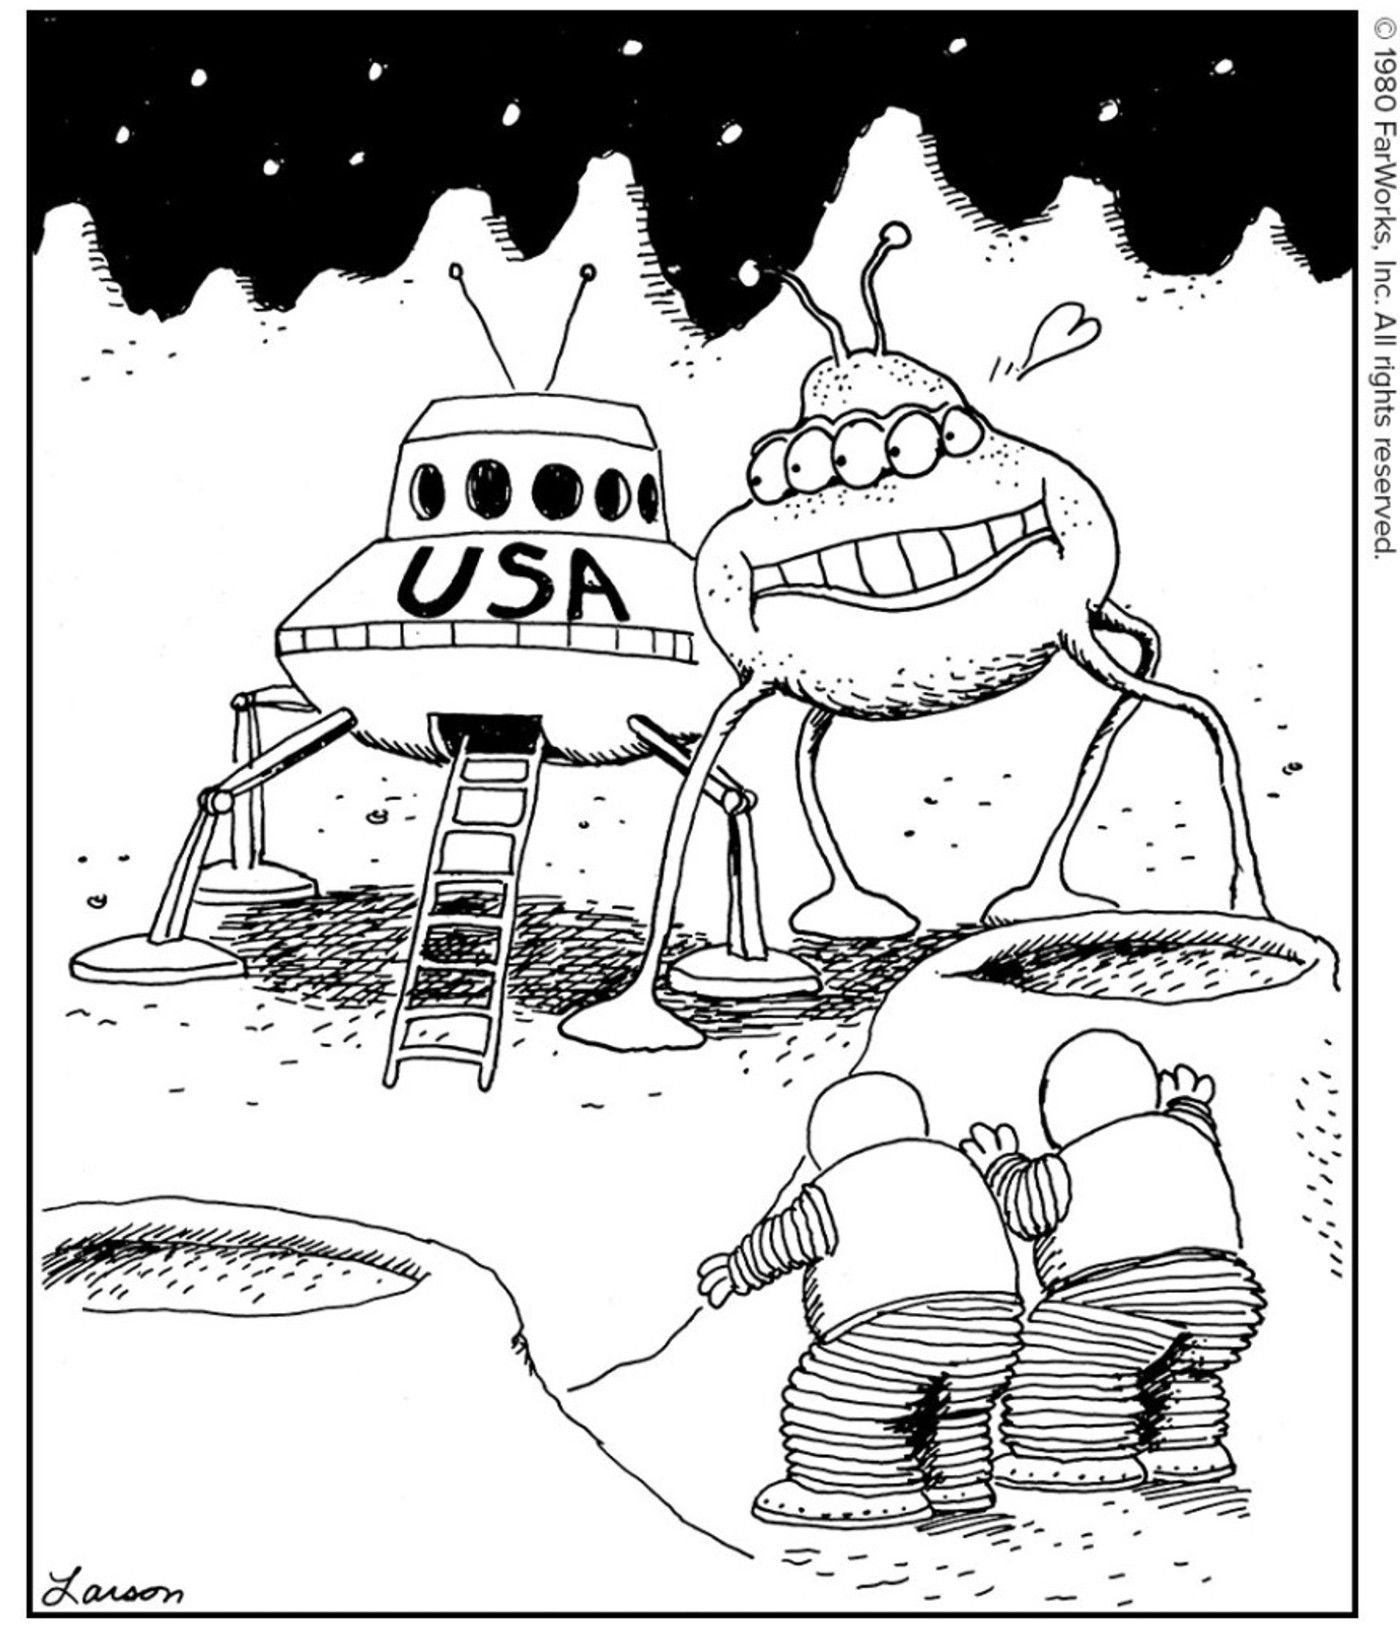 10 Funniest Far Side Comics Where Astronauts Make a Disturbing Discovery